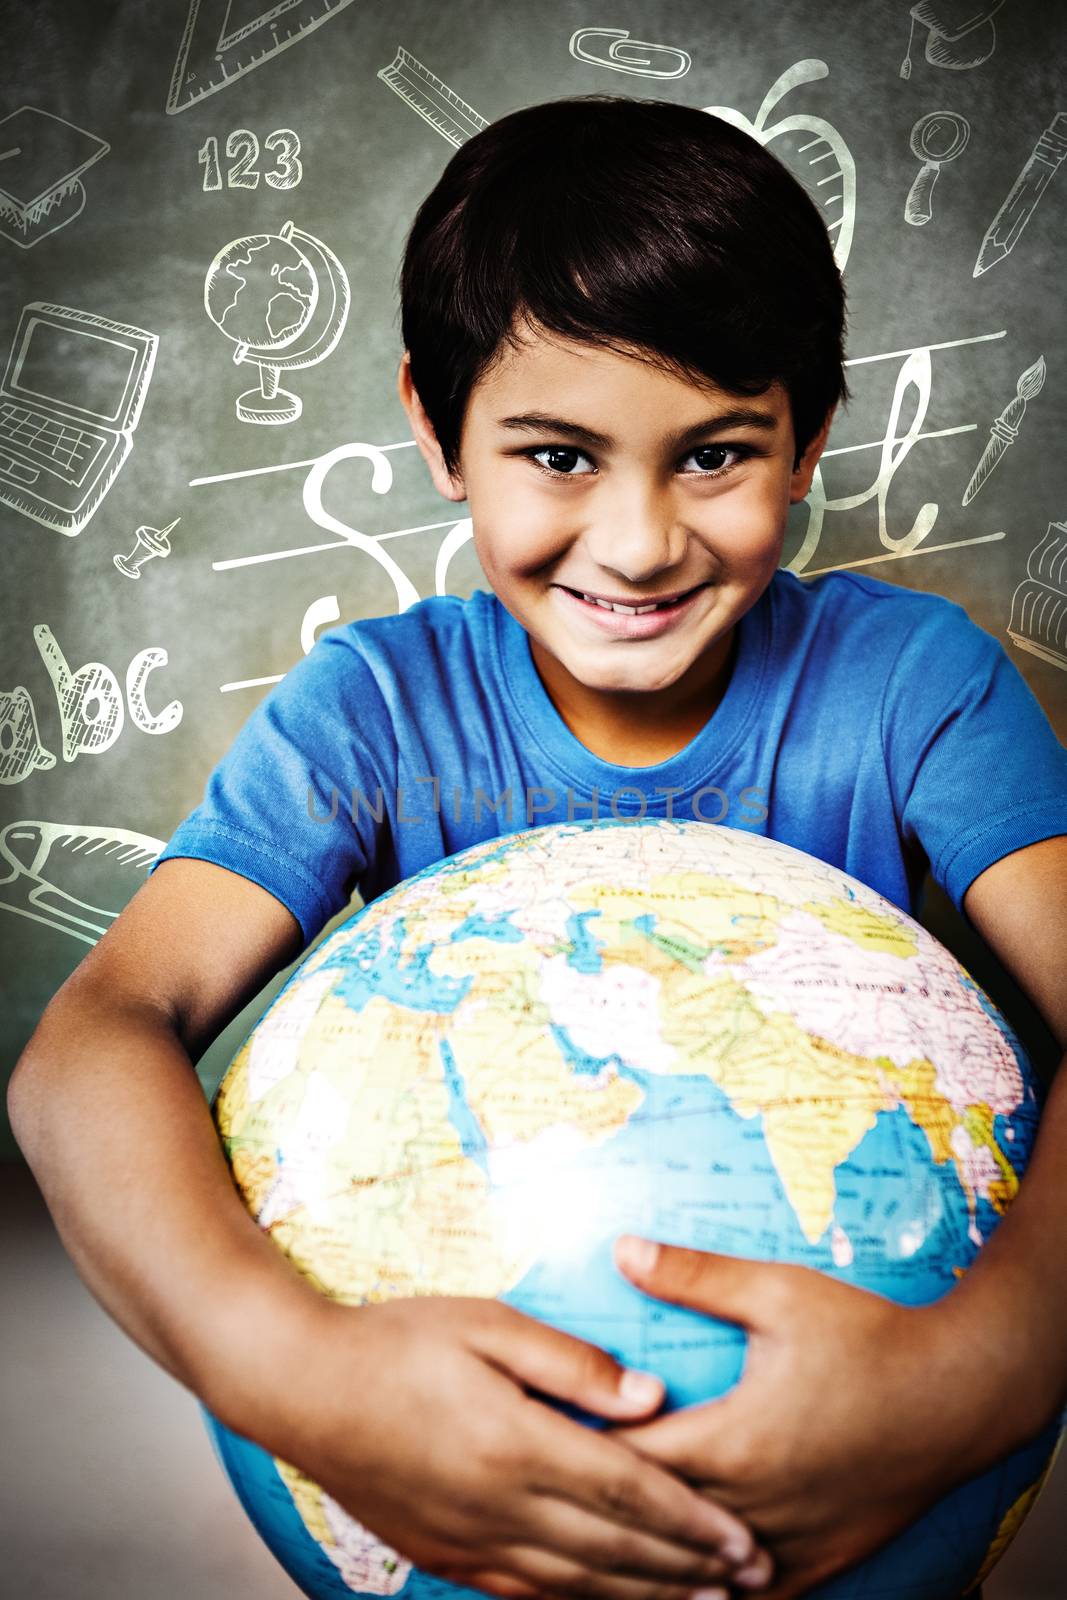 Education doodles against cute little boy holding globe